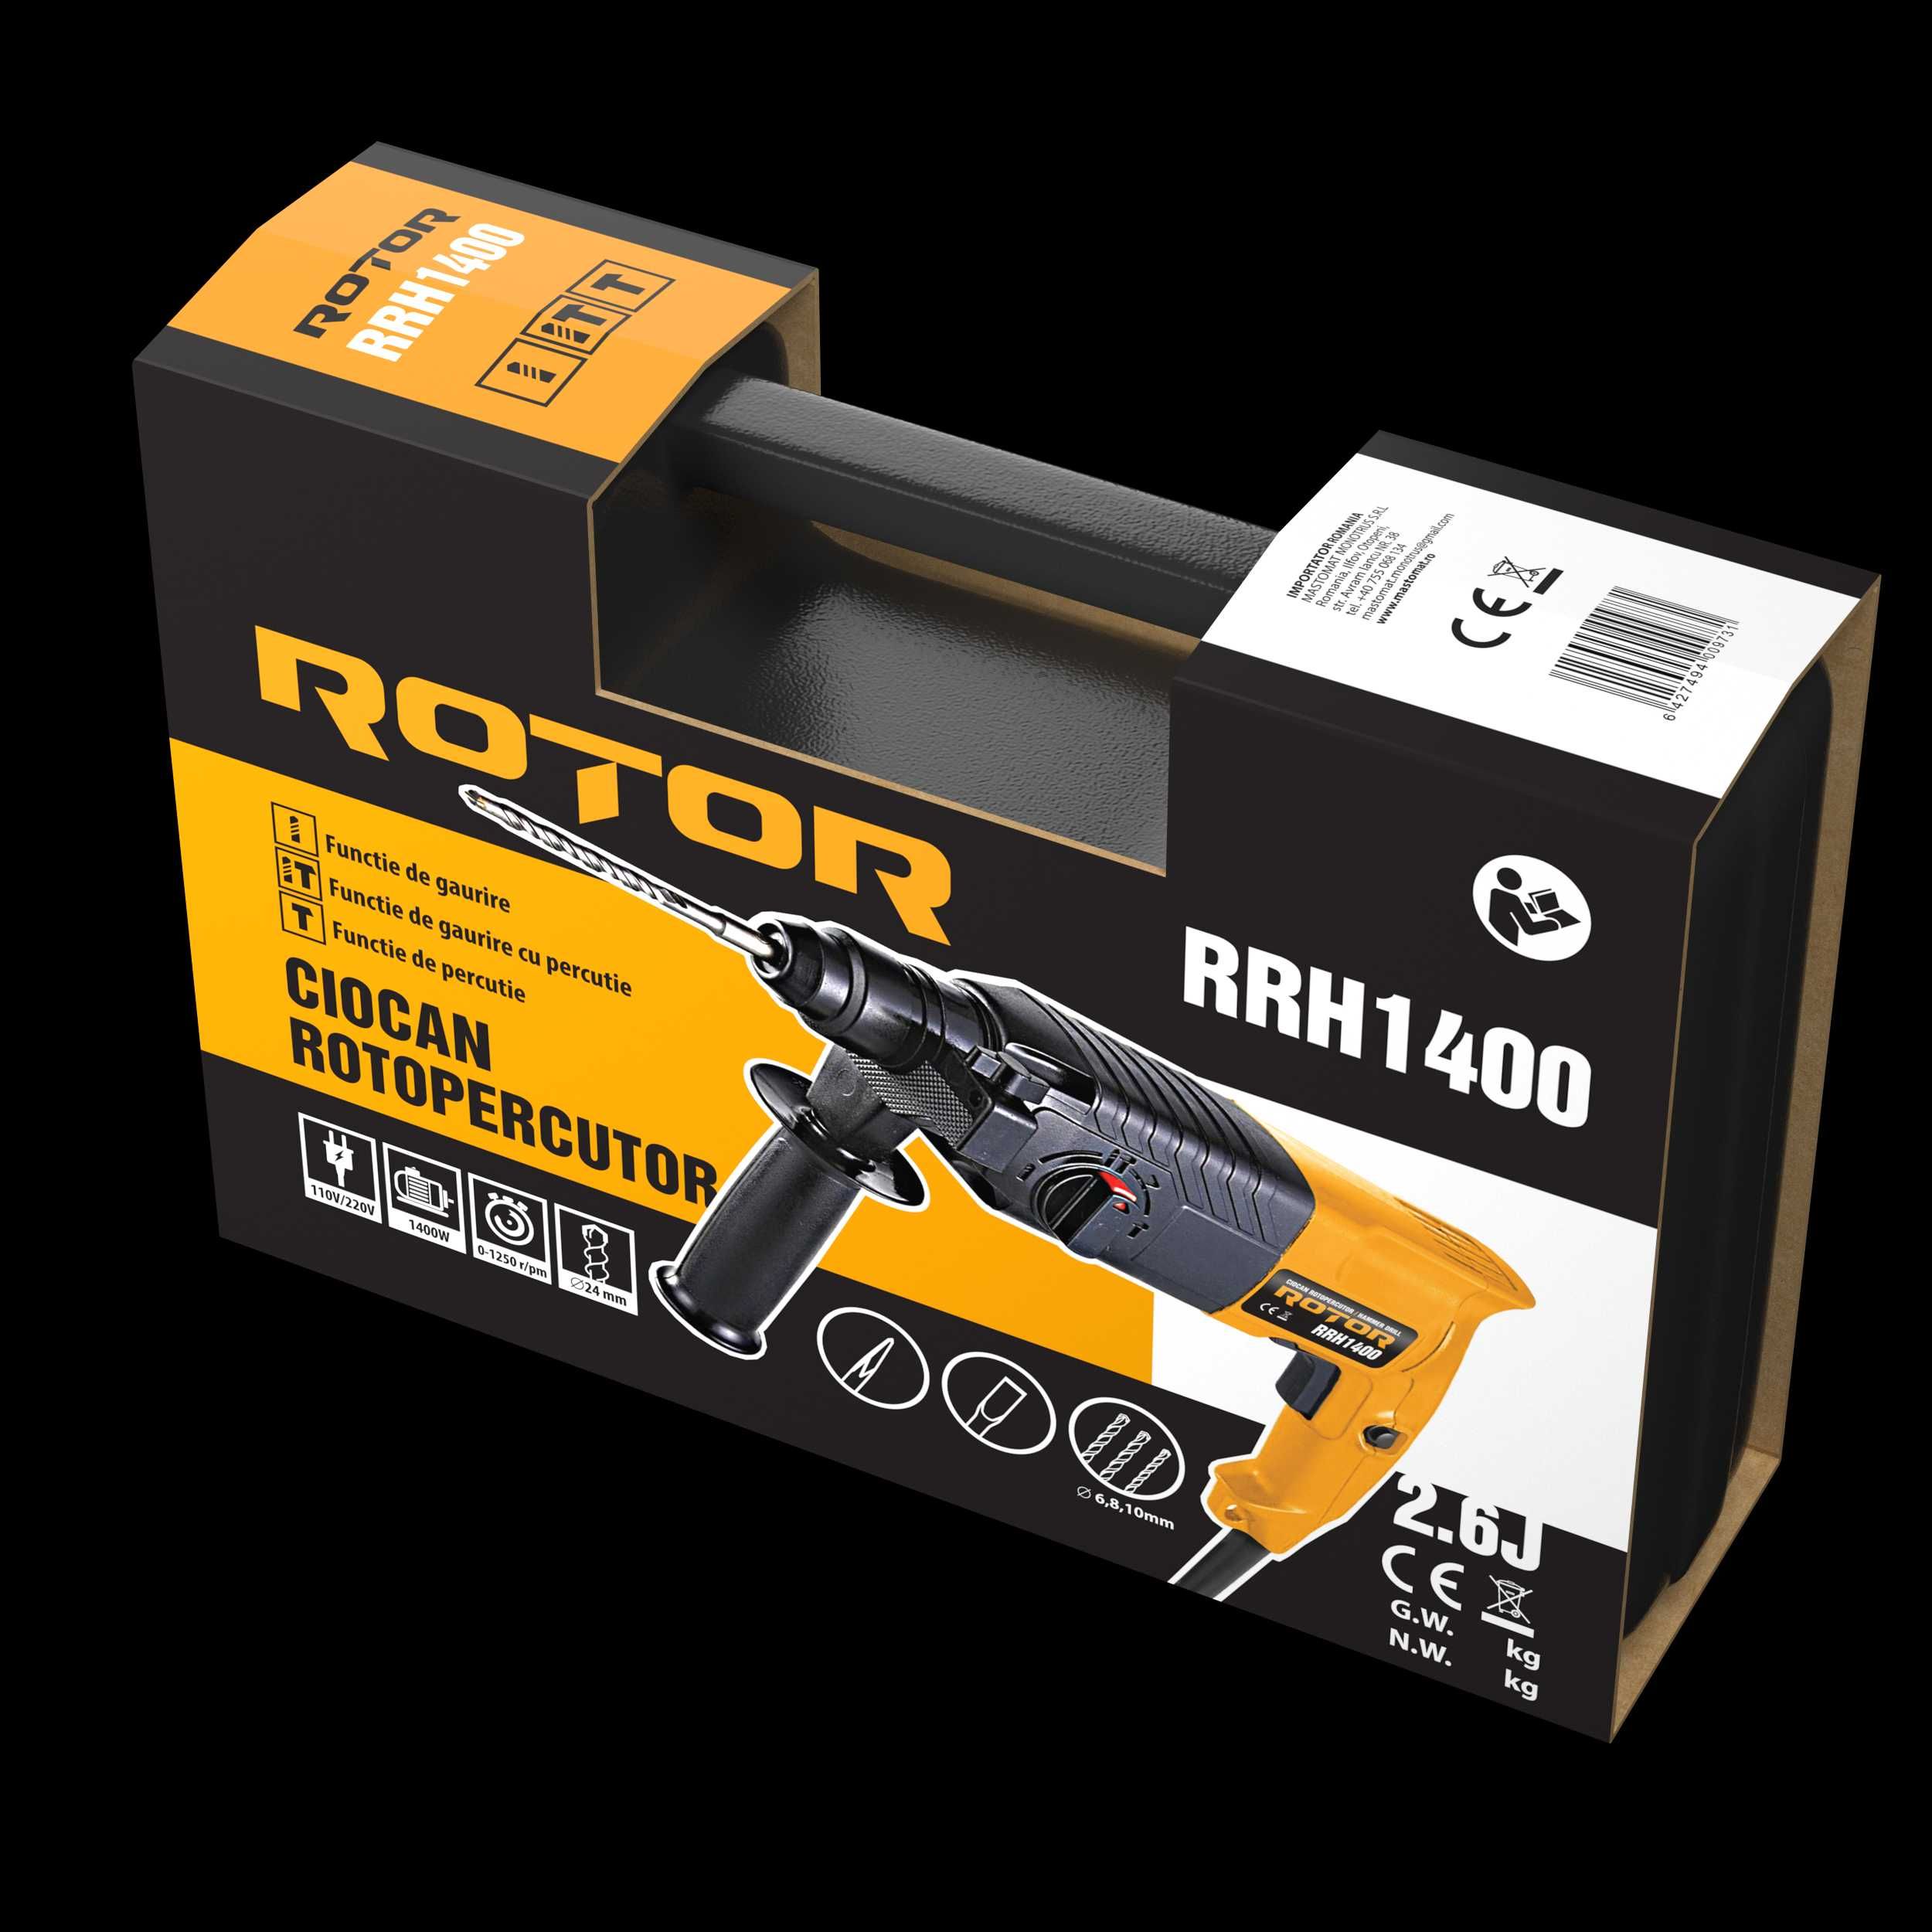 Ciocan rotopercutor ROTOR  RRH-1400 W.